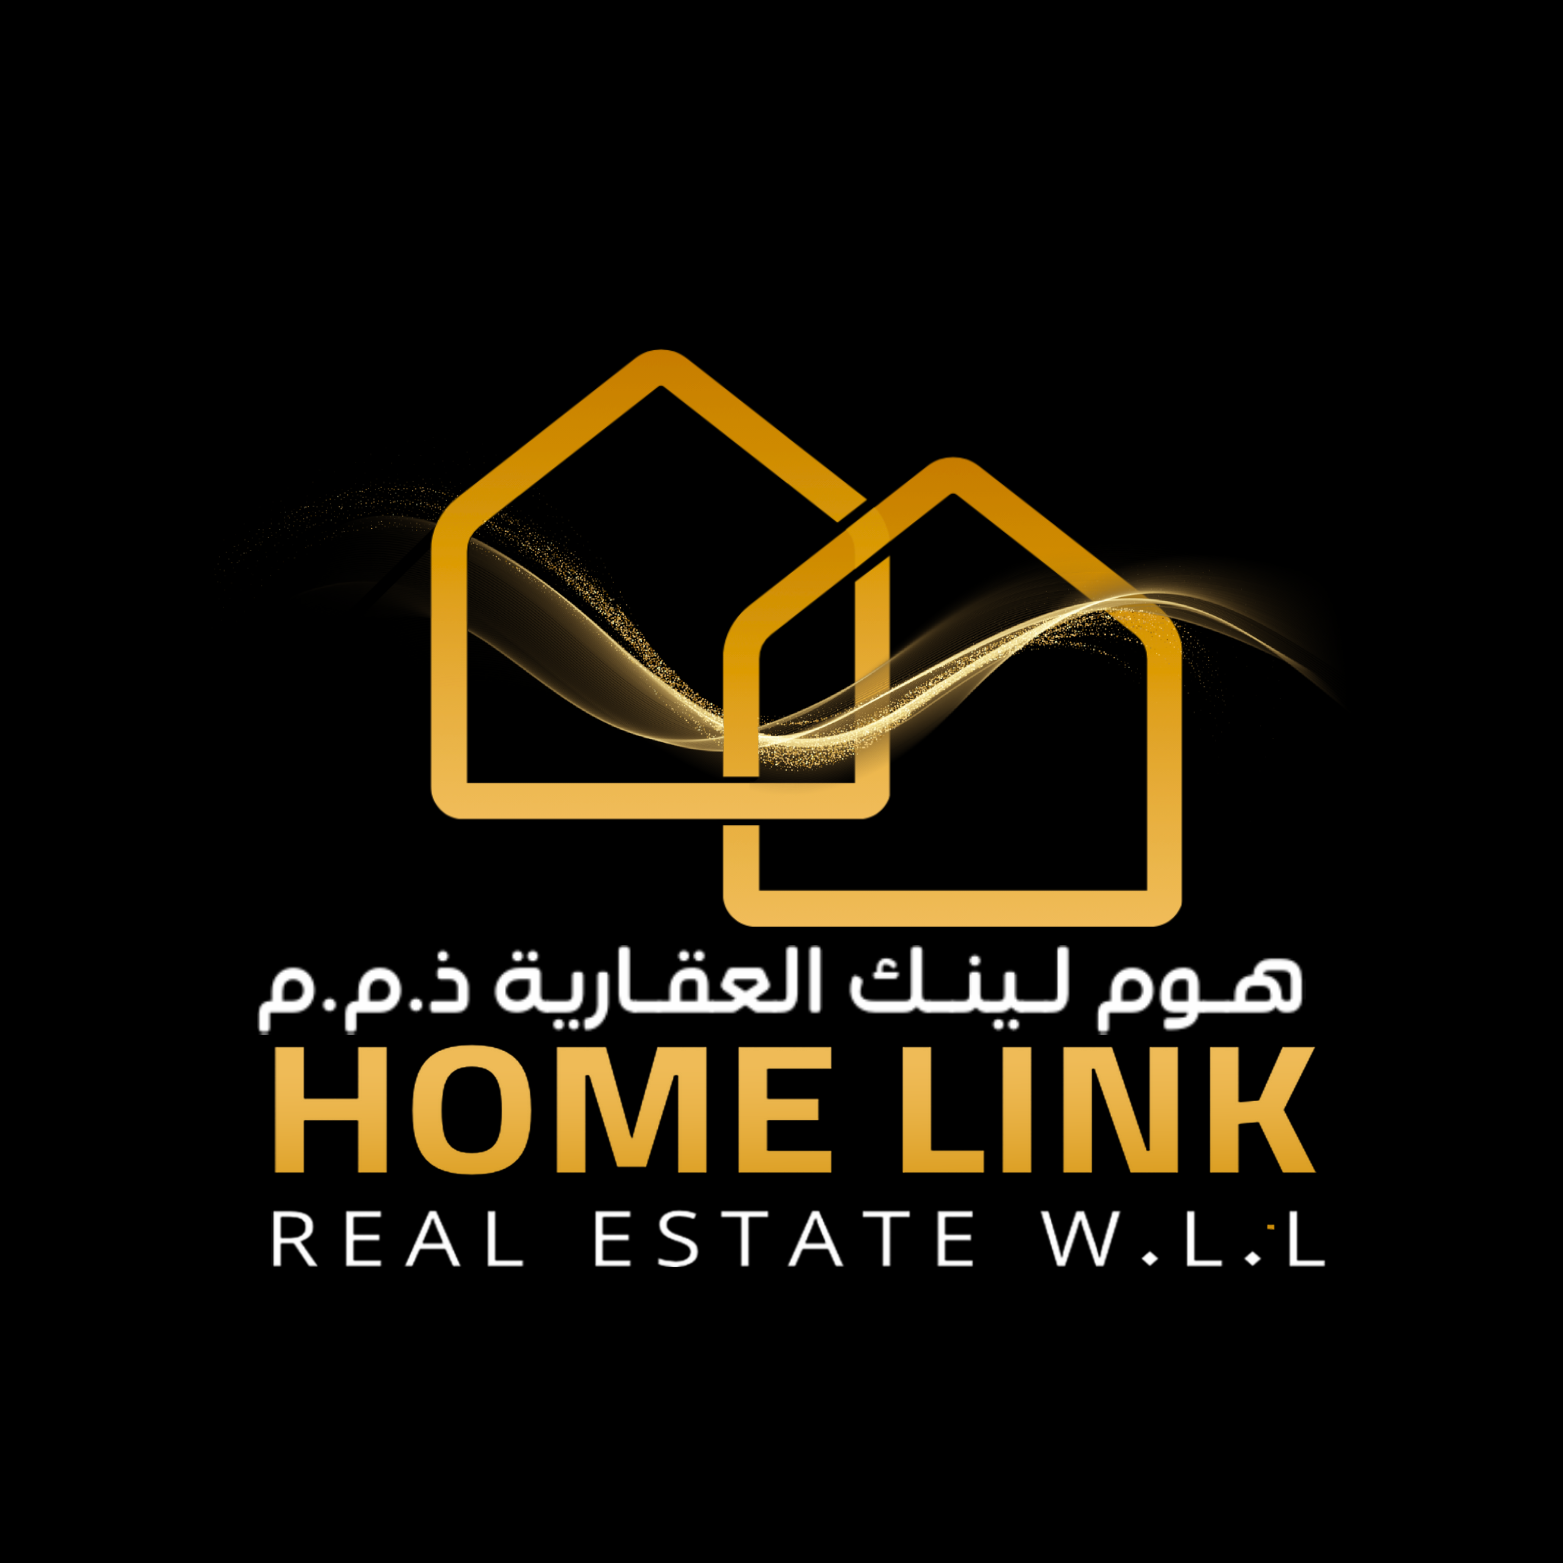 NA Home Link Real Estate W.L.L